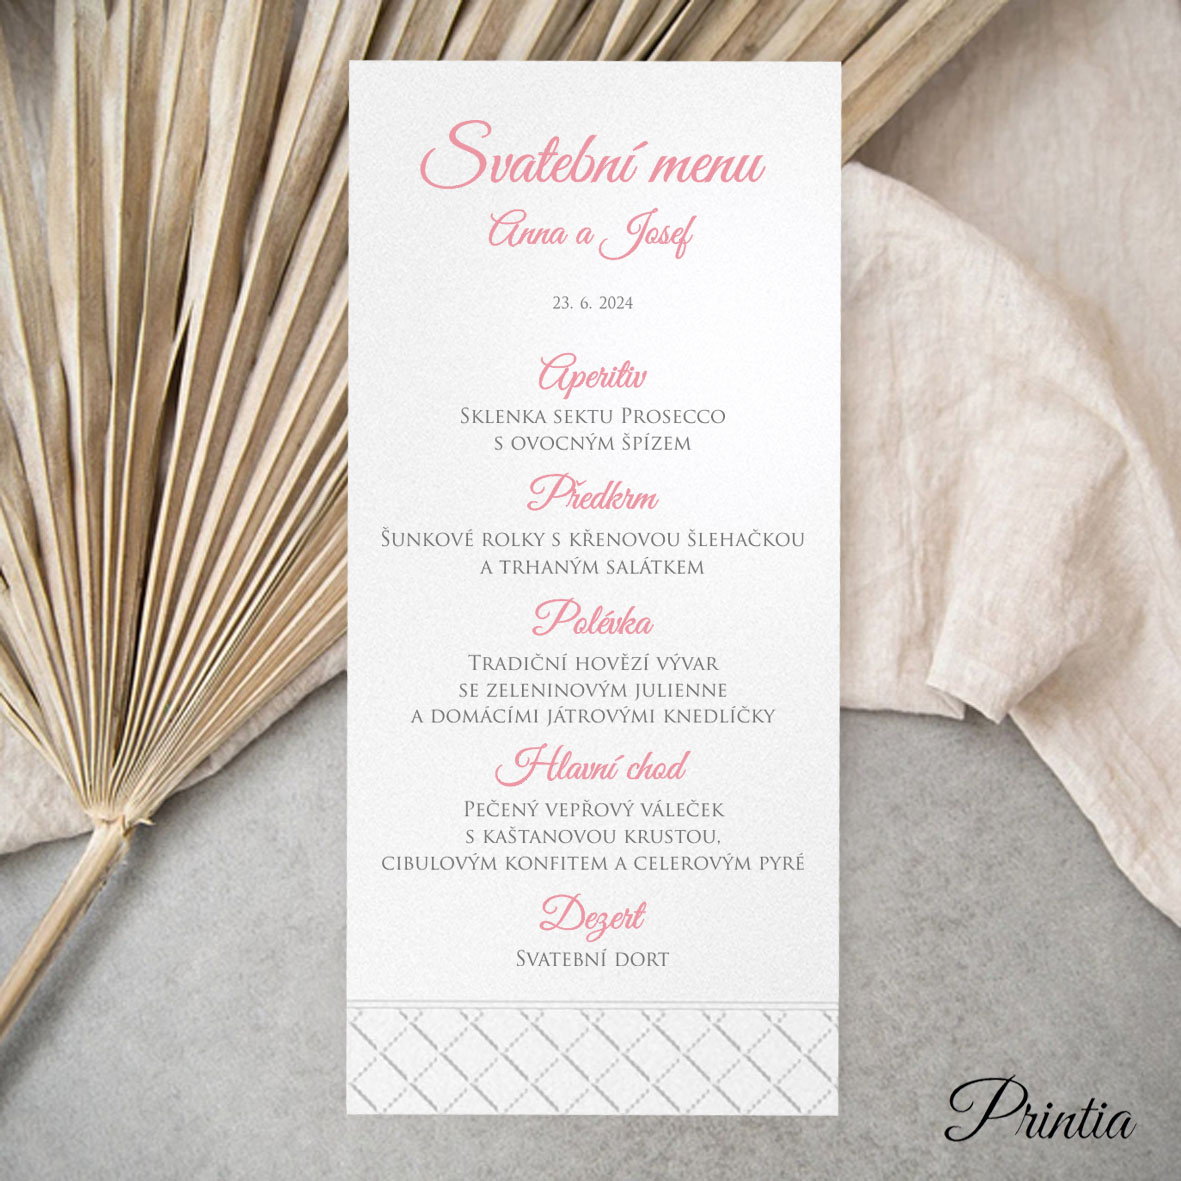 Svatební menu s vytlačenými ornamenty